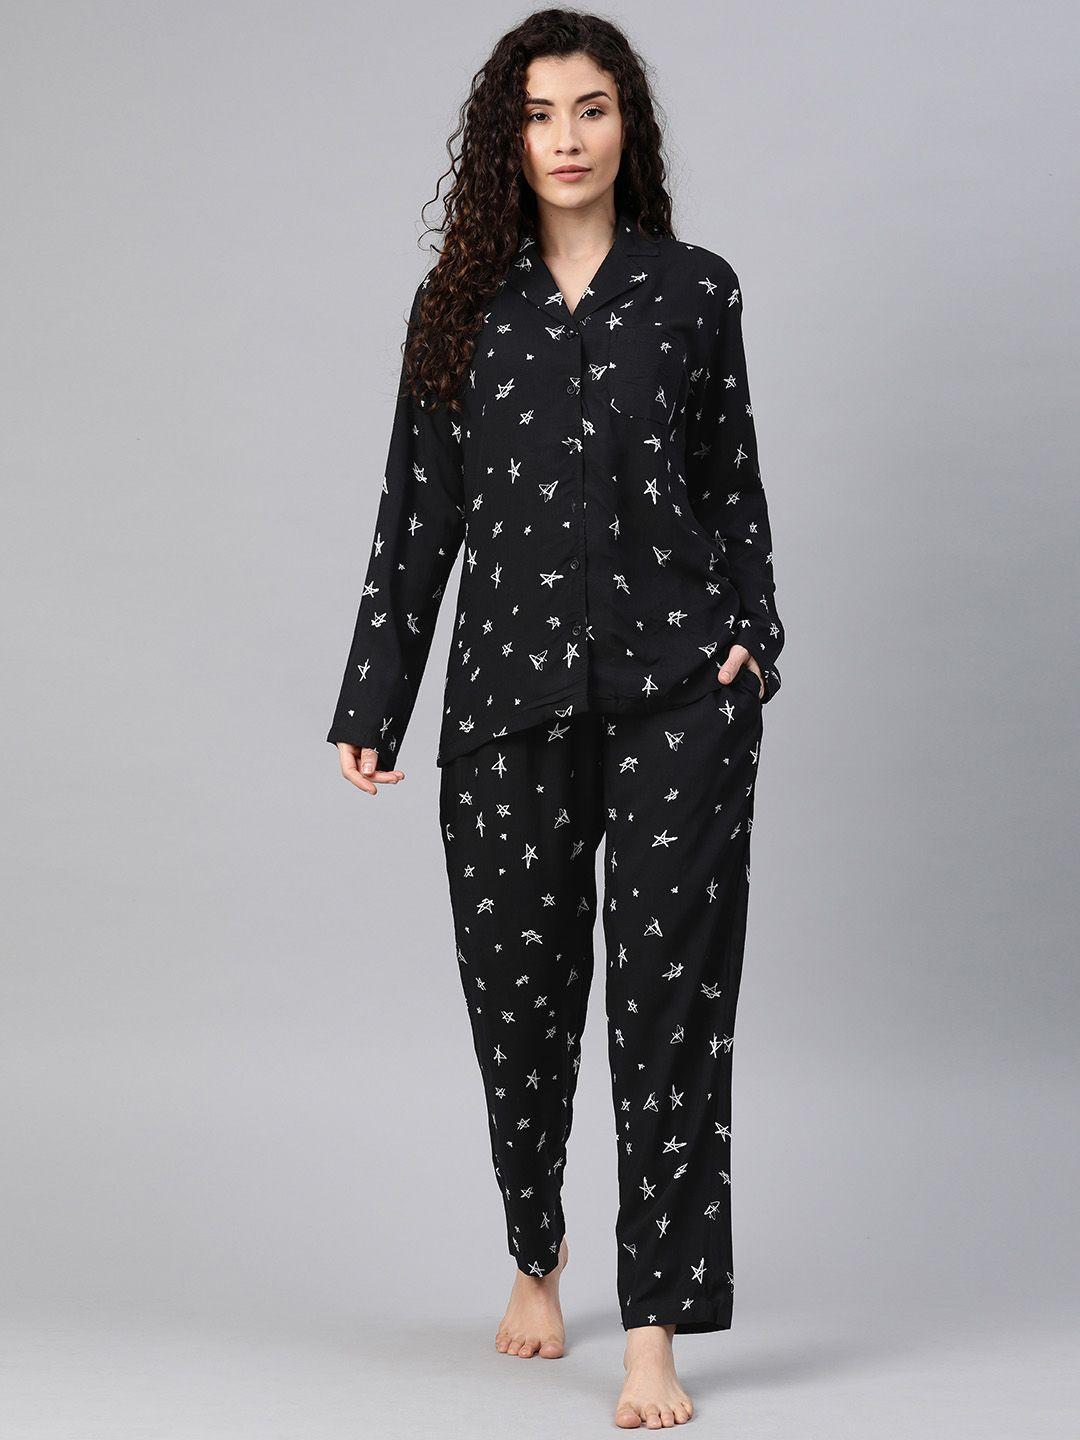 drape in vogue women black & white conversational printed night suit